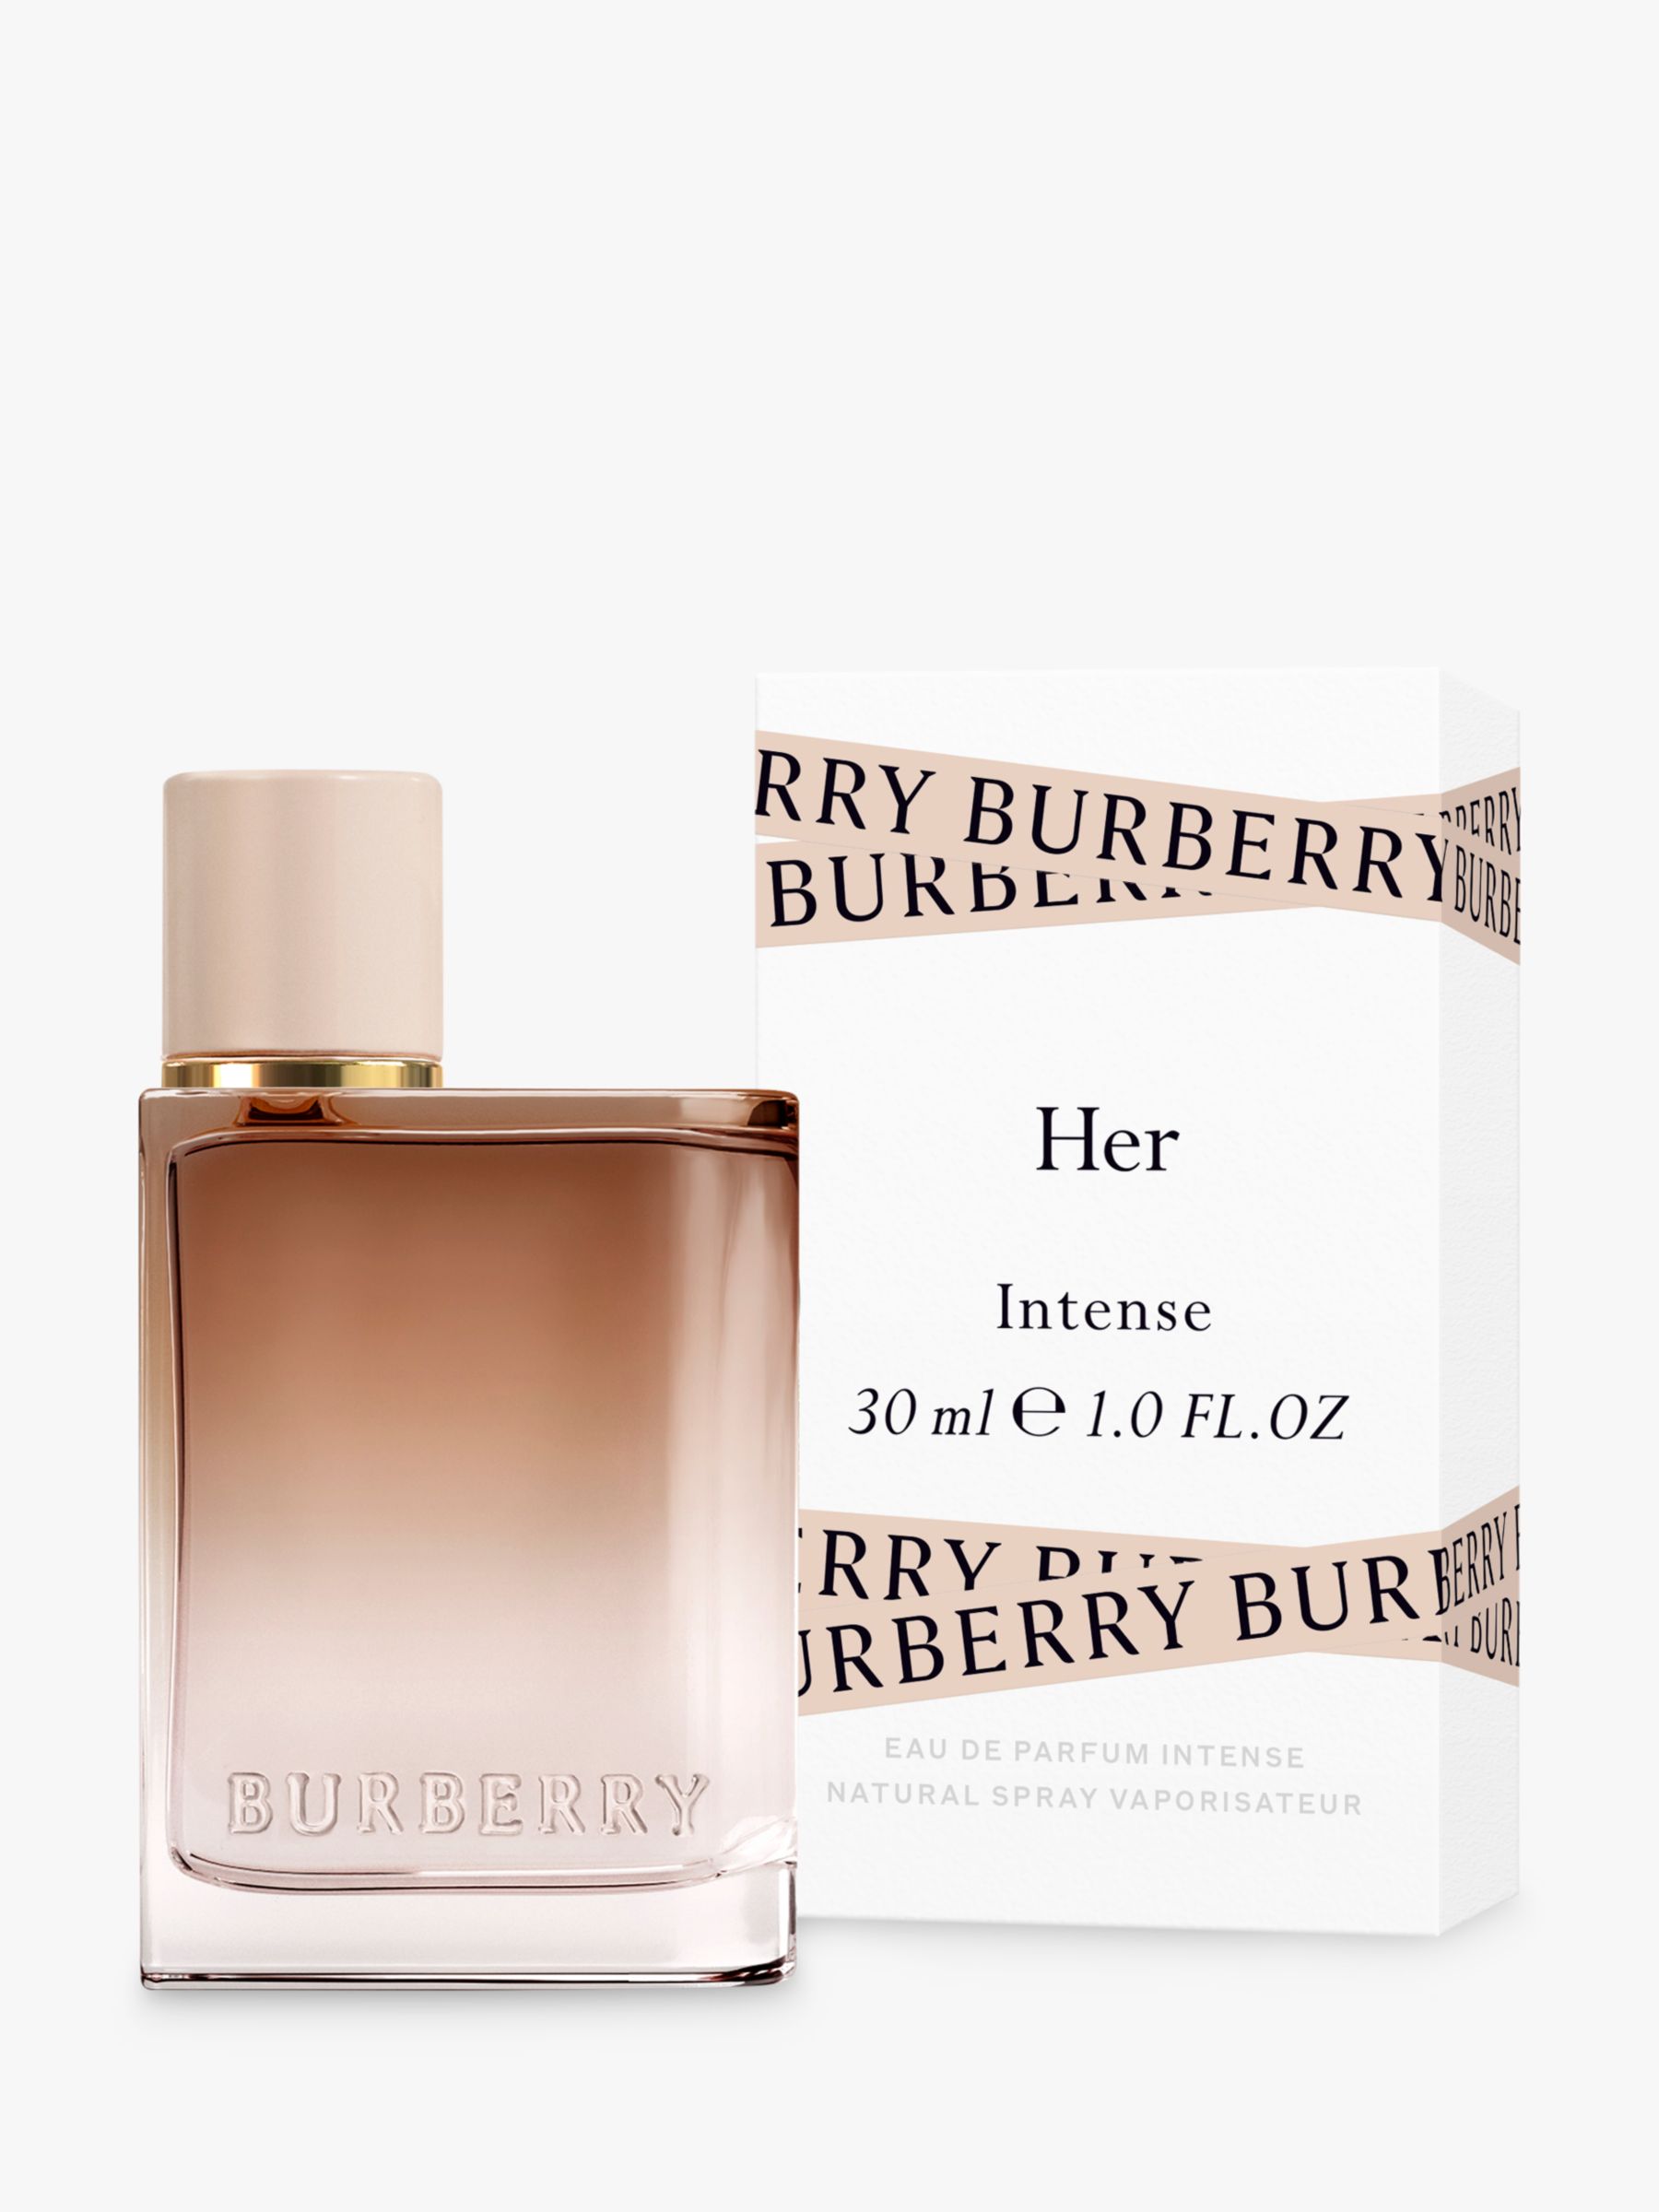 Burberry Her Intense Eau de Parfum at 